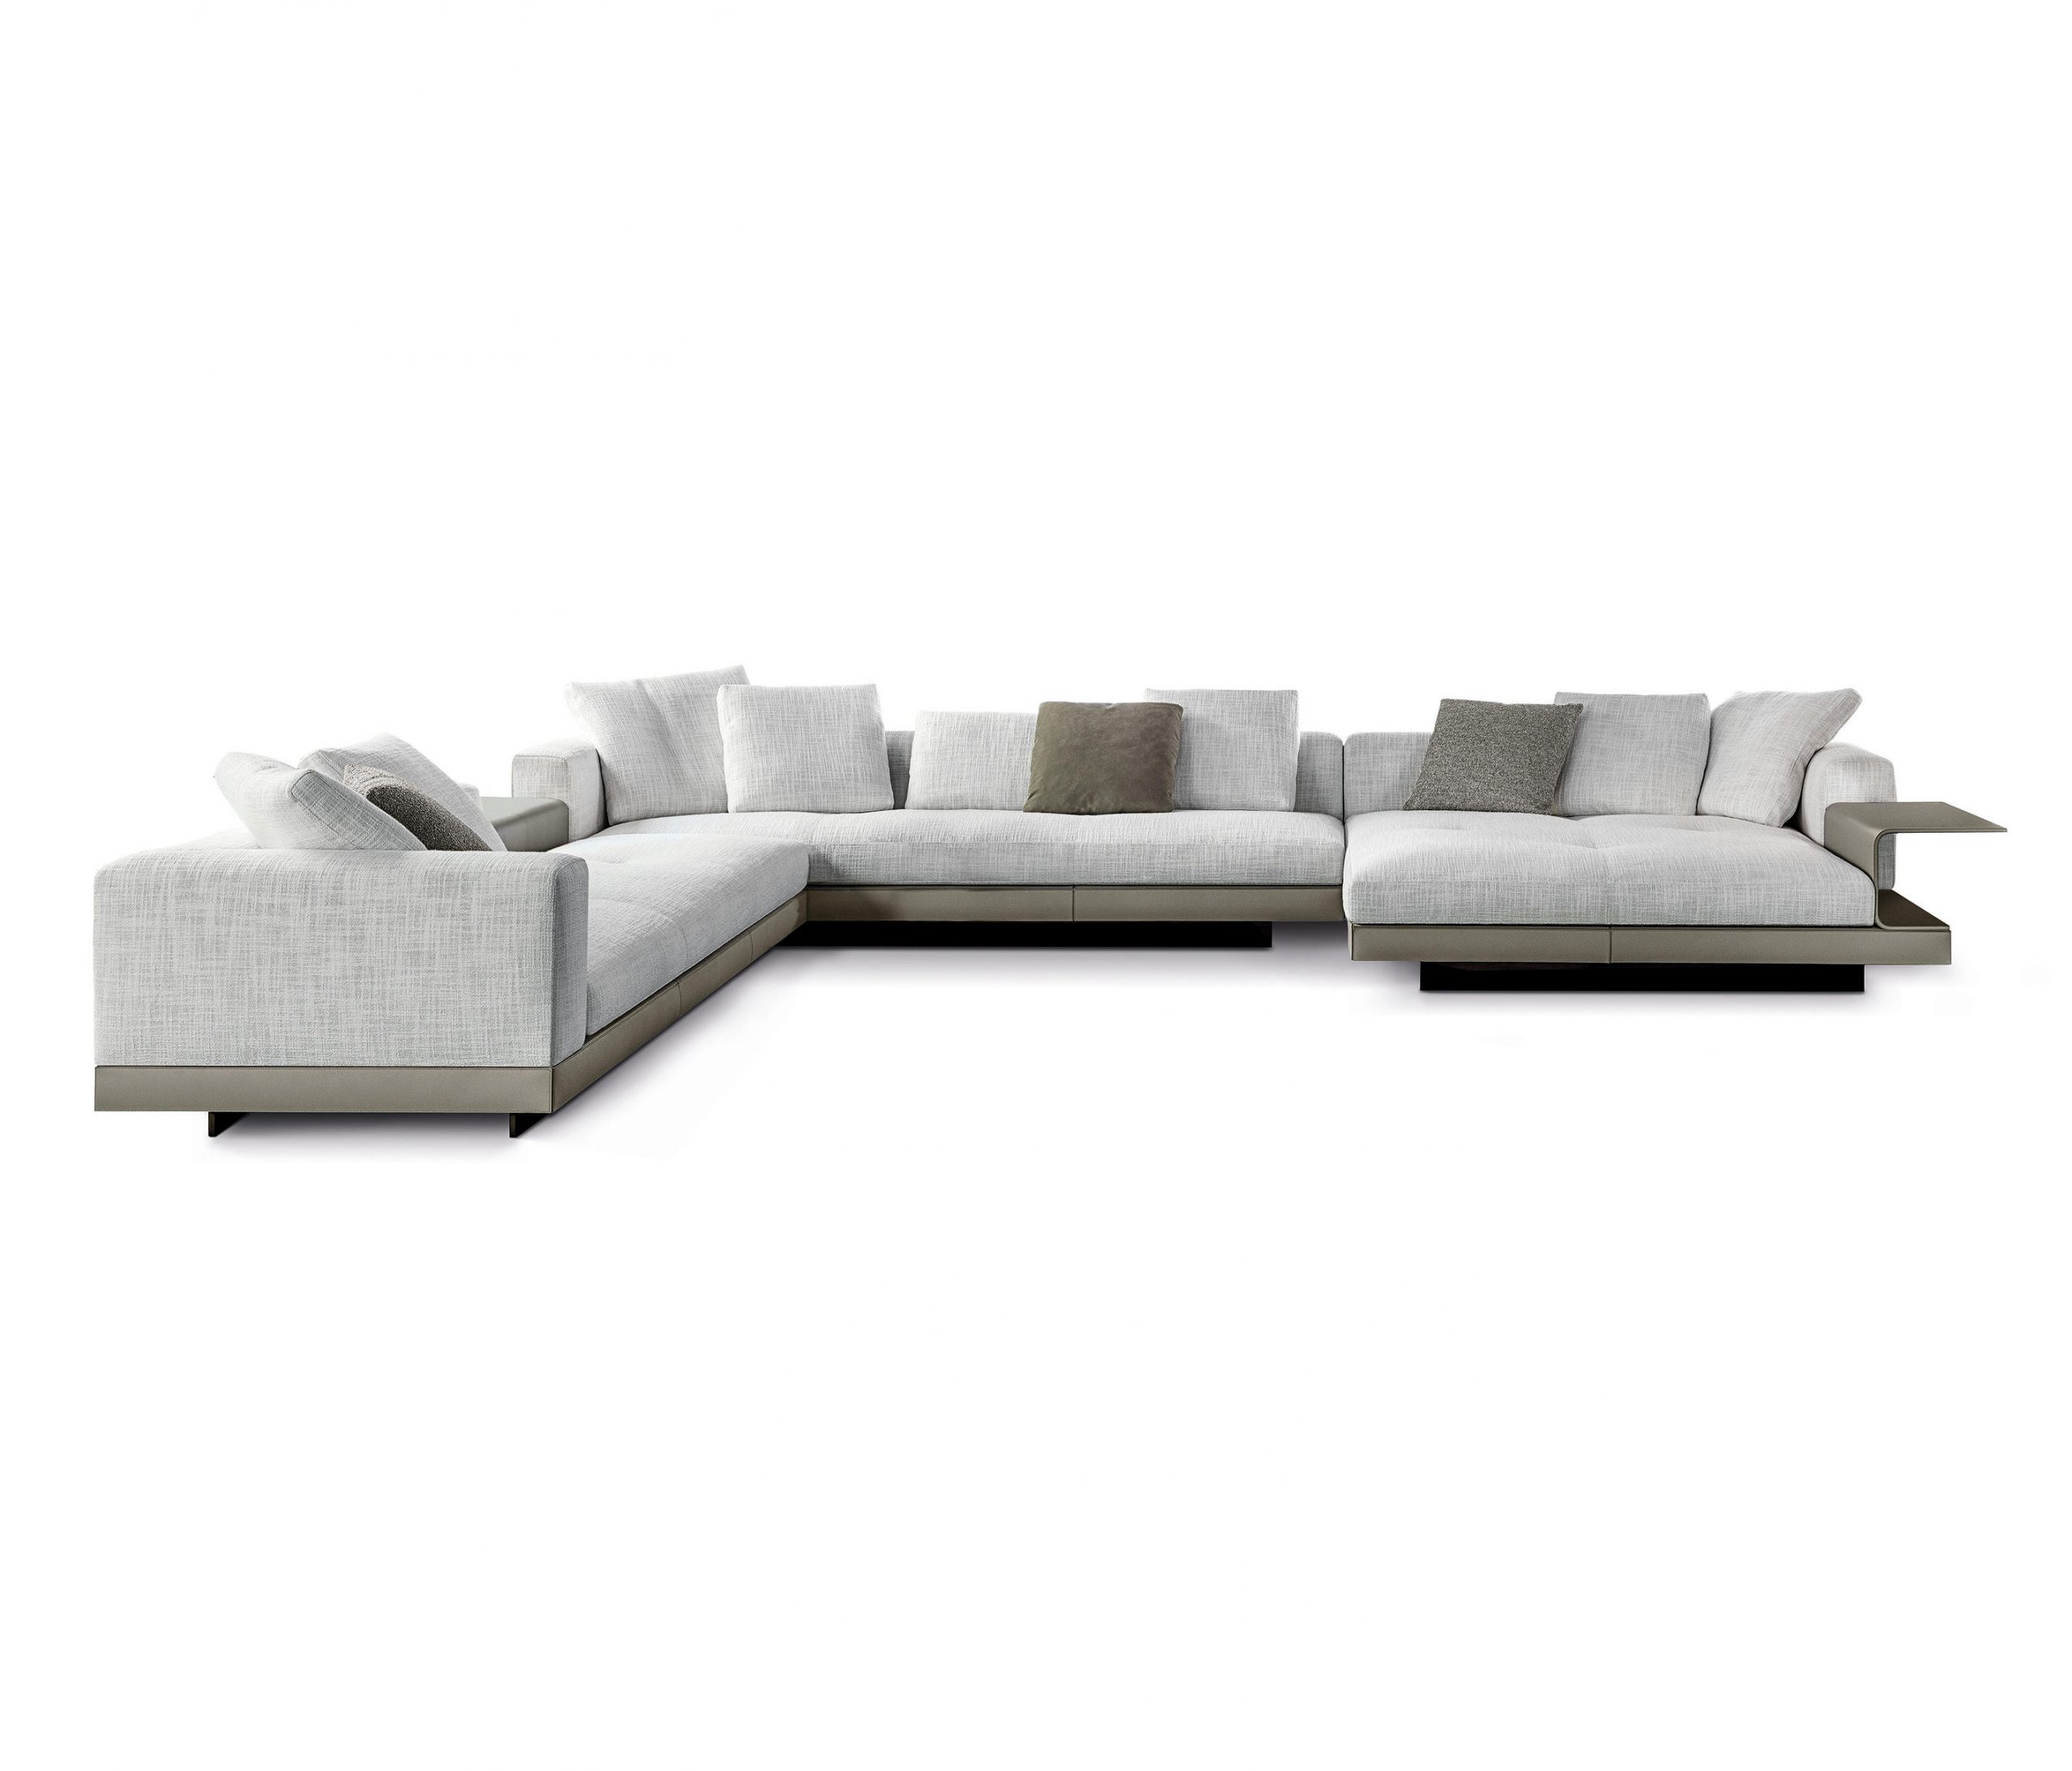 Connery Modular Sofa by Minotti